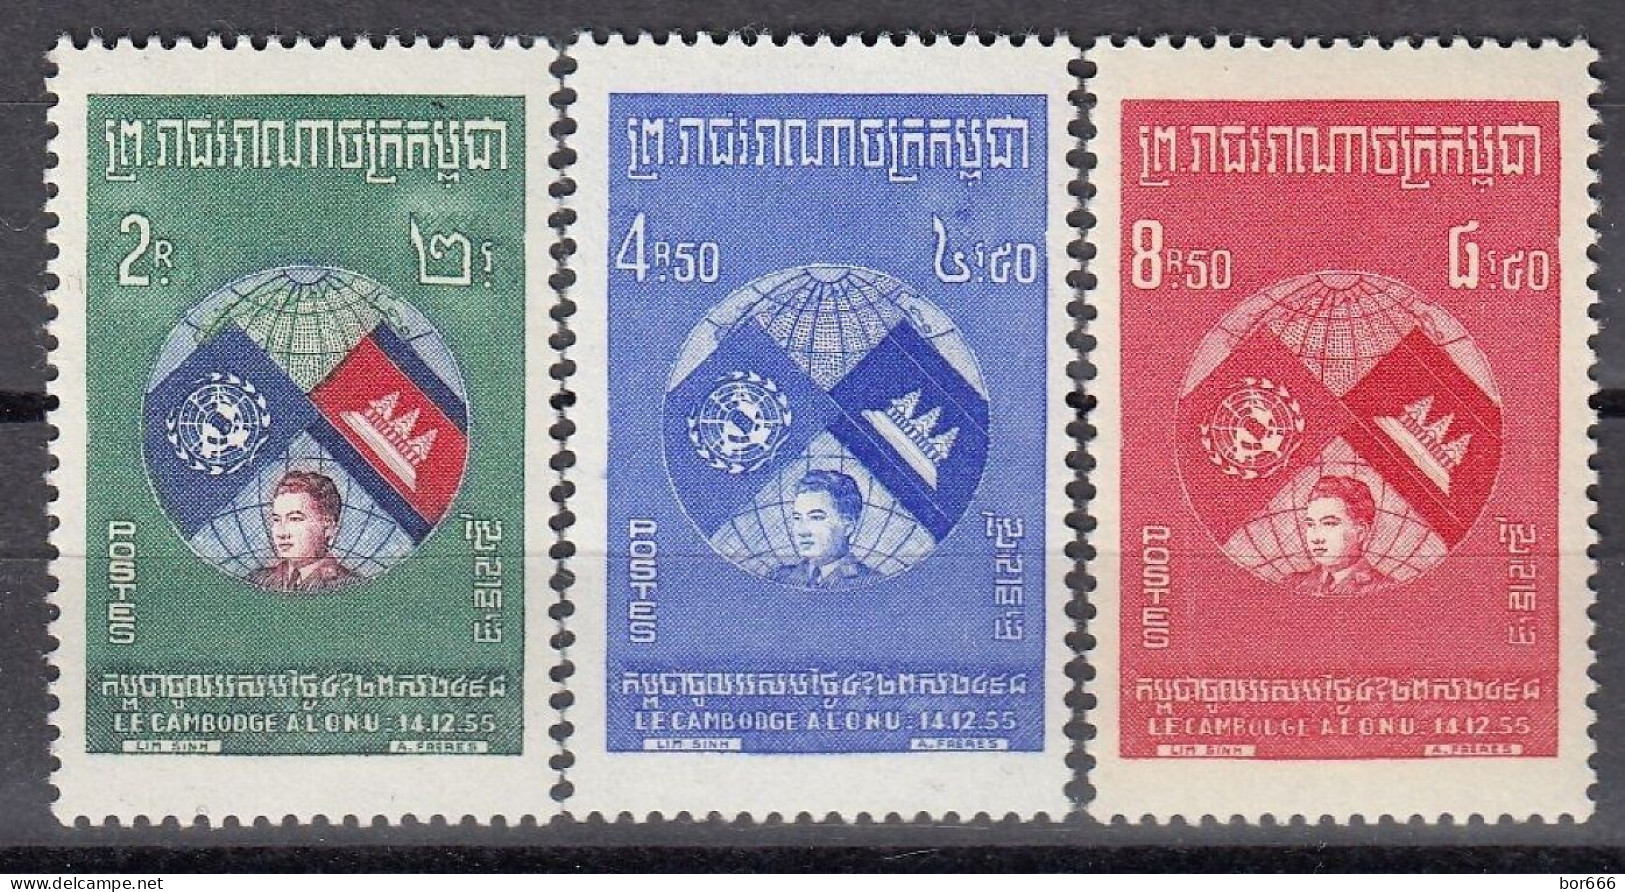 Kampuchea - PRINCE / FLAGS / UNITED NATIONS 1957 MNH - Kampuchea